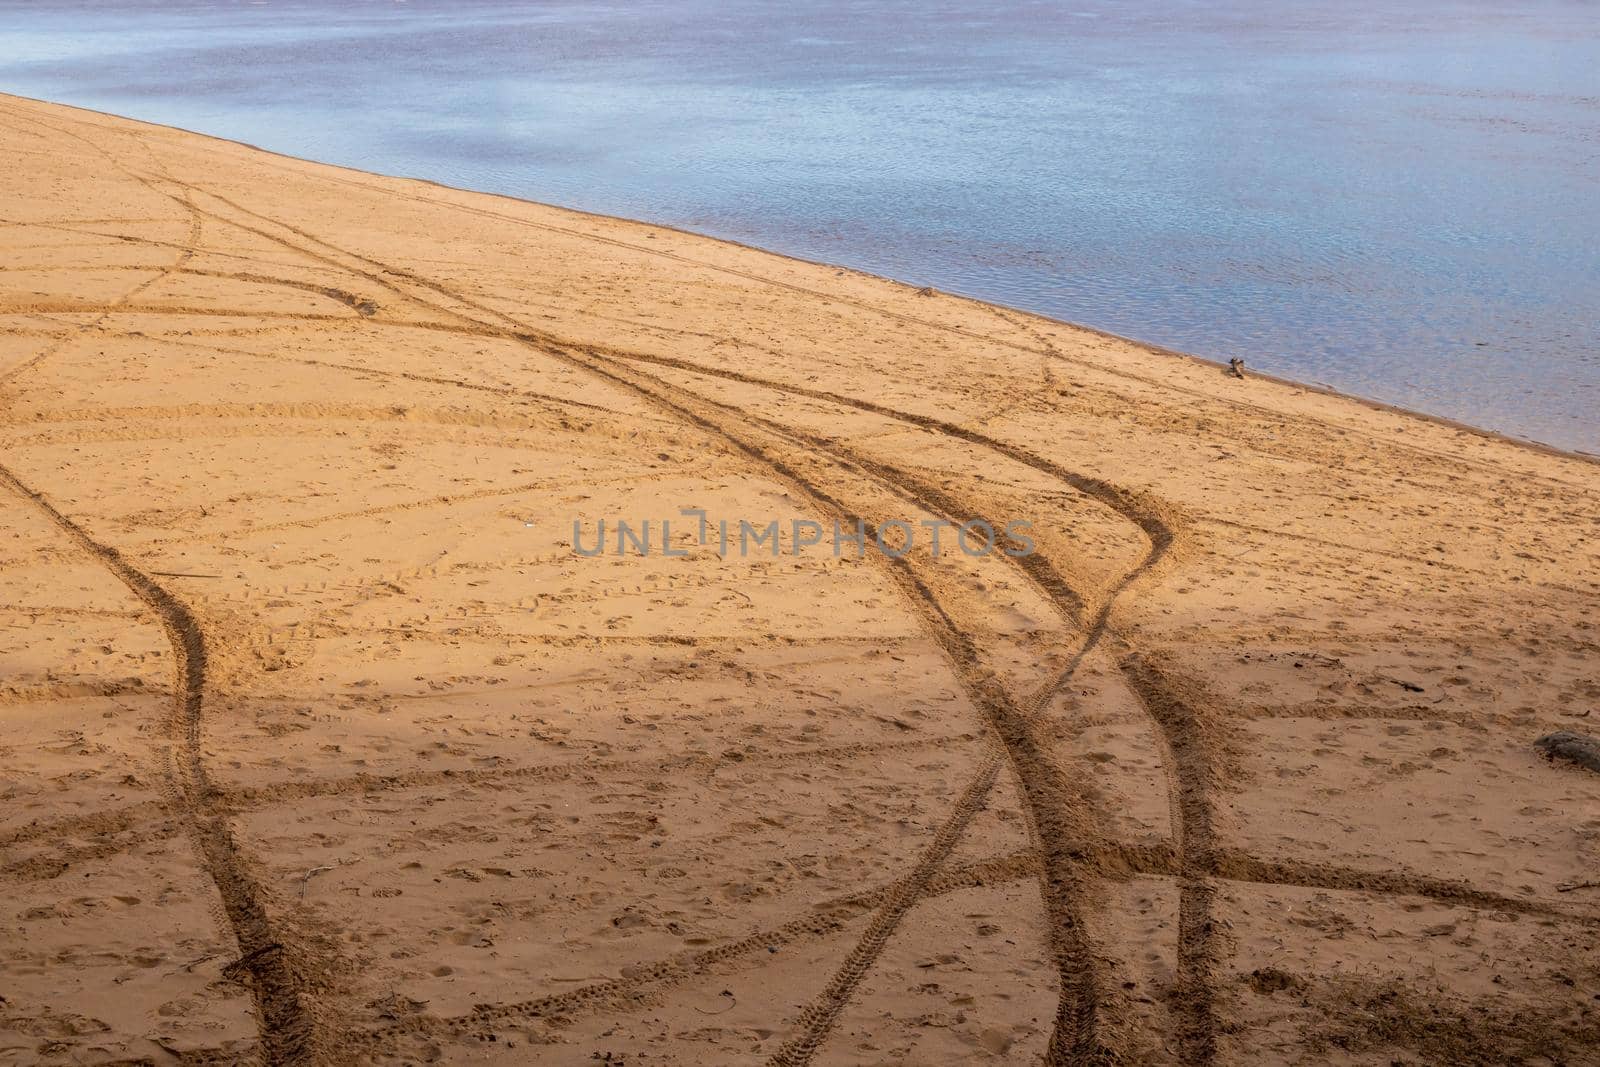 Tire tracks on the sand of an empty beach near the river by lapushka62